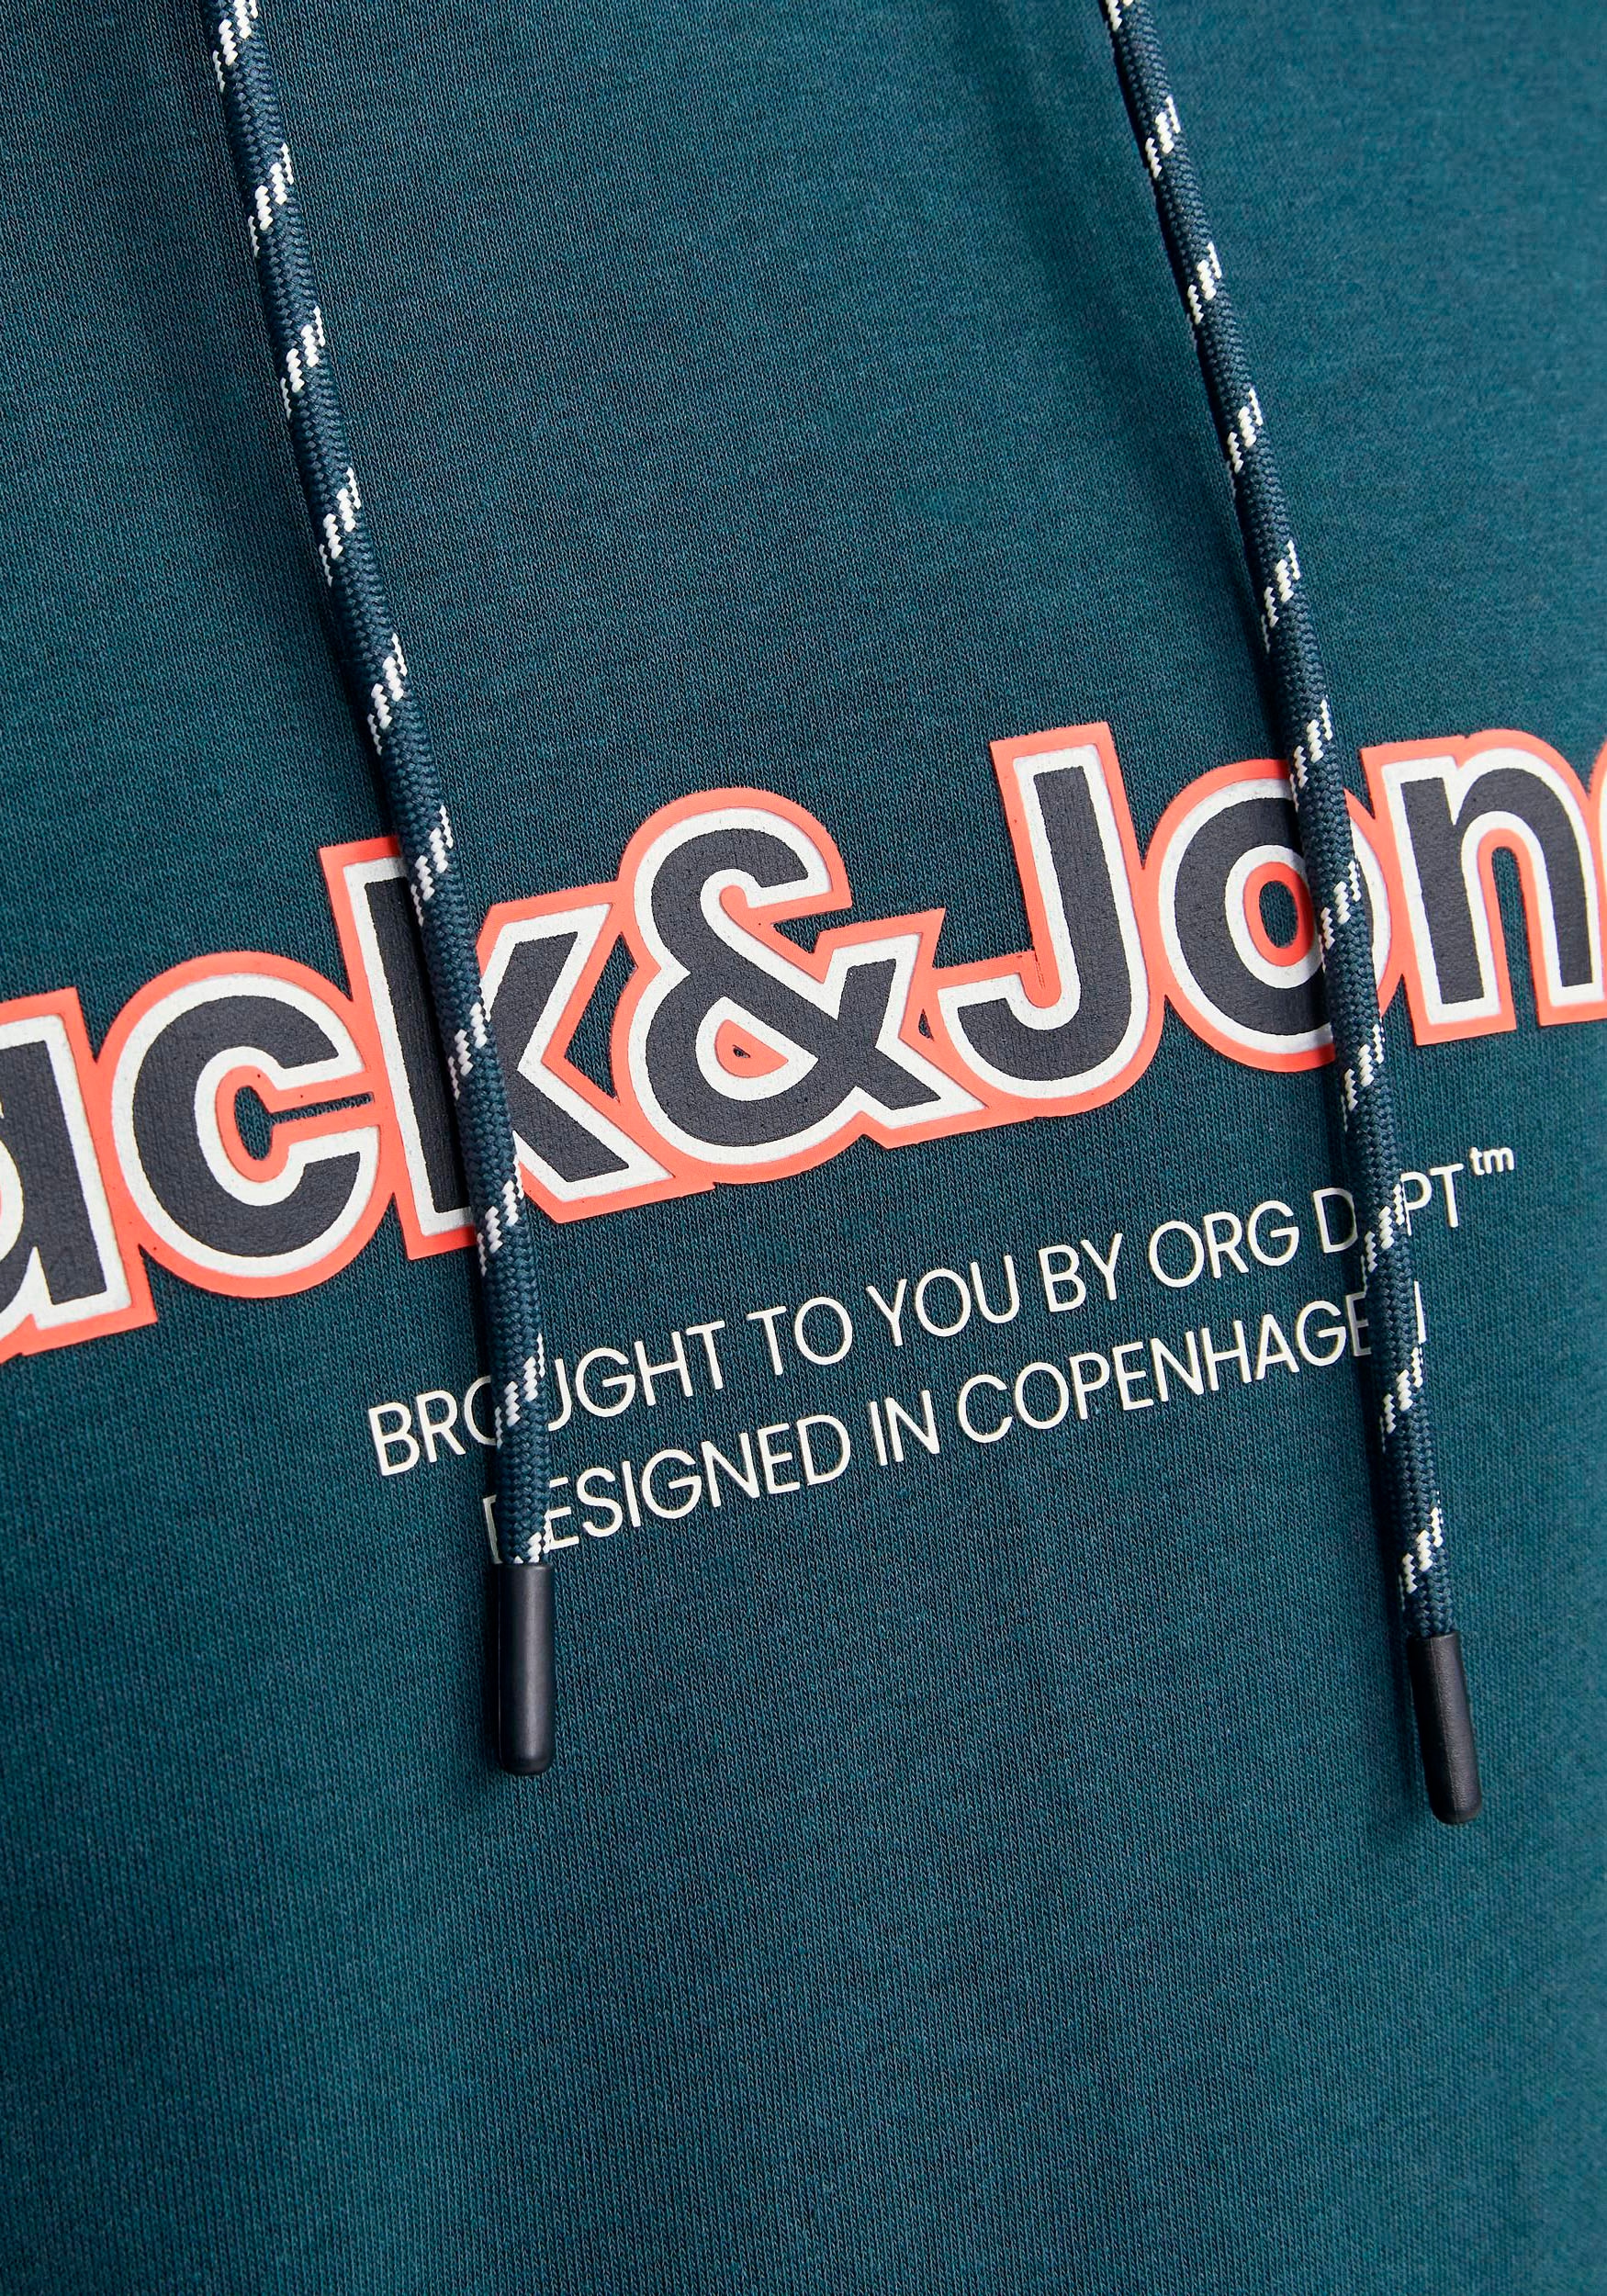 Jack & Jones Hoodie »JORLAKEWOOD SWEAT HOOD BF«, mit coolem Print